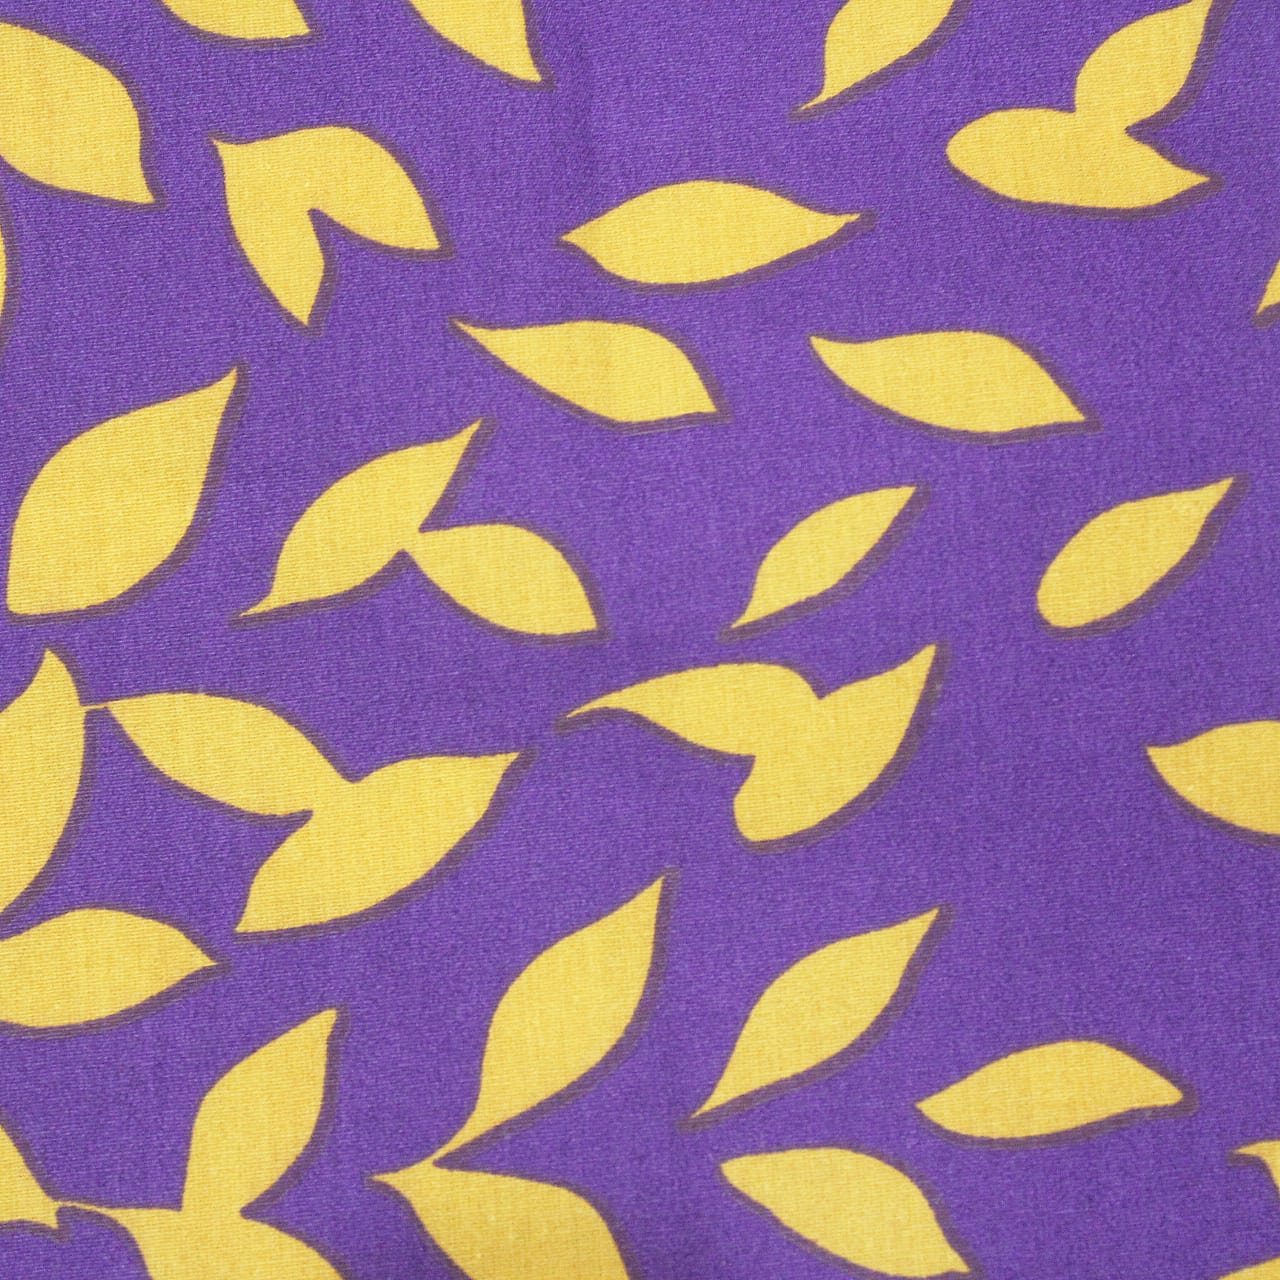 Soft Floral Print Cotton Bolster Cover Set online in Purple - 2Pcs